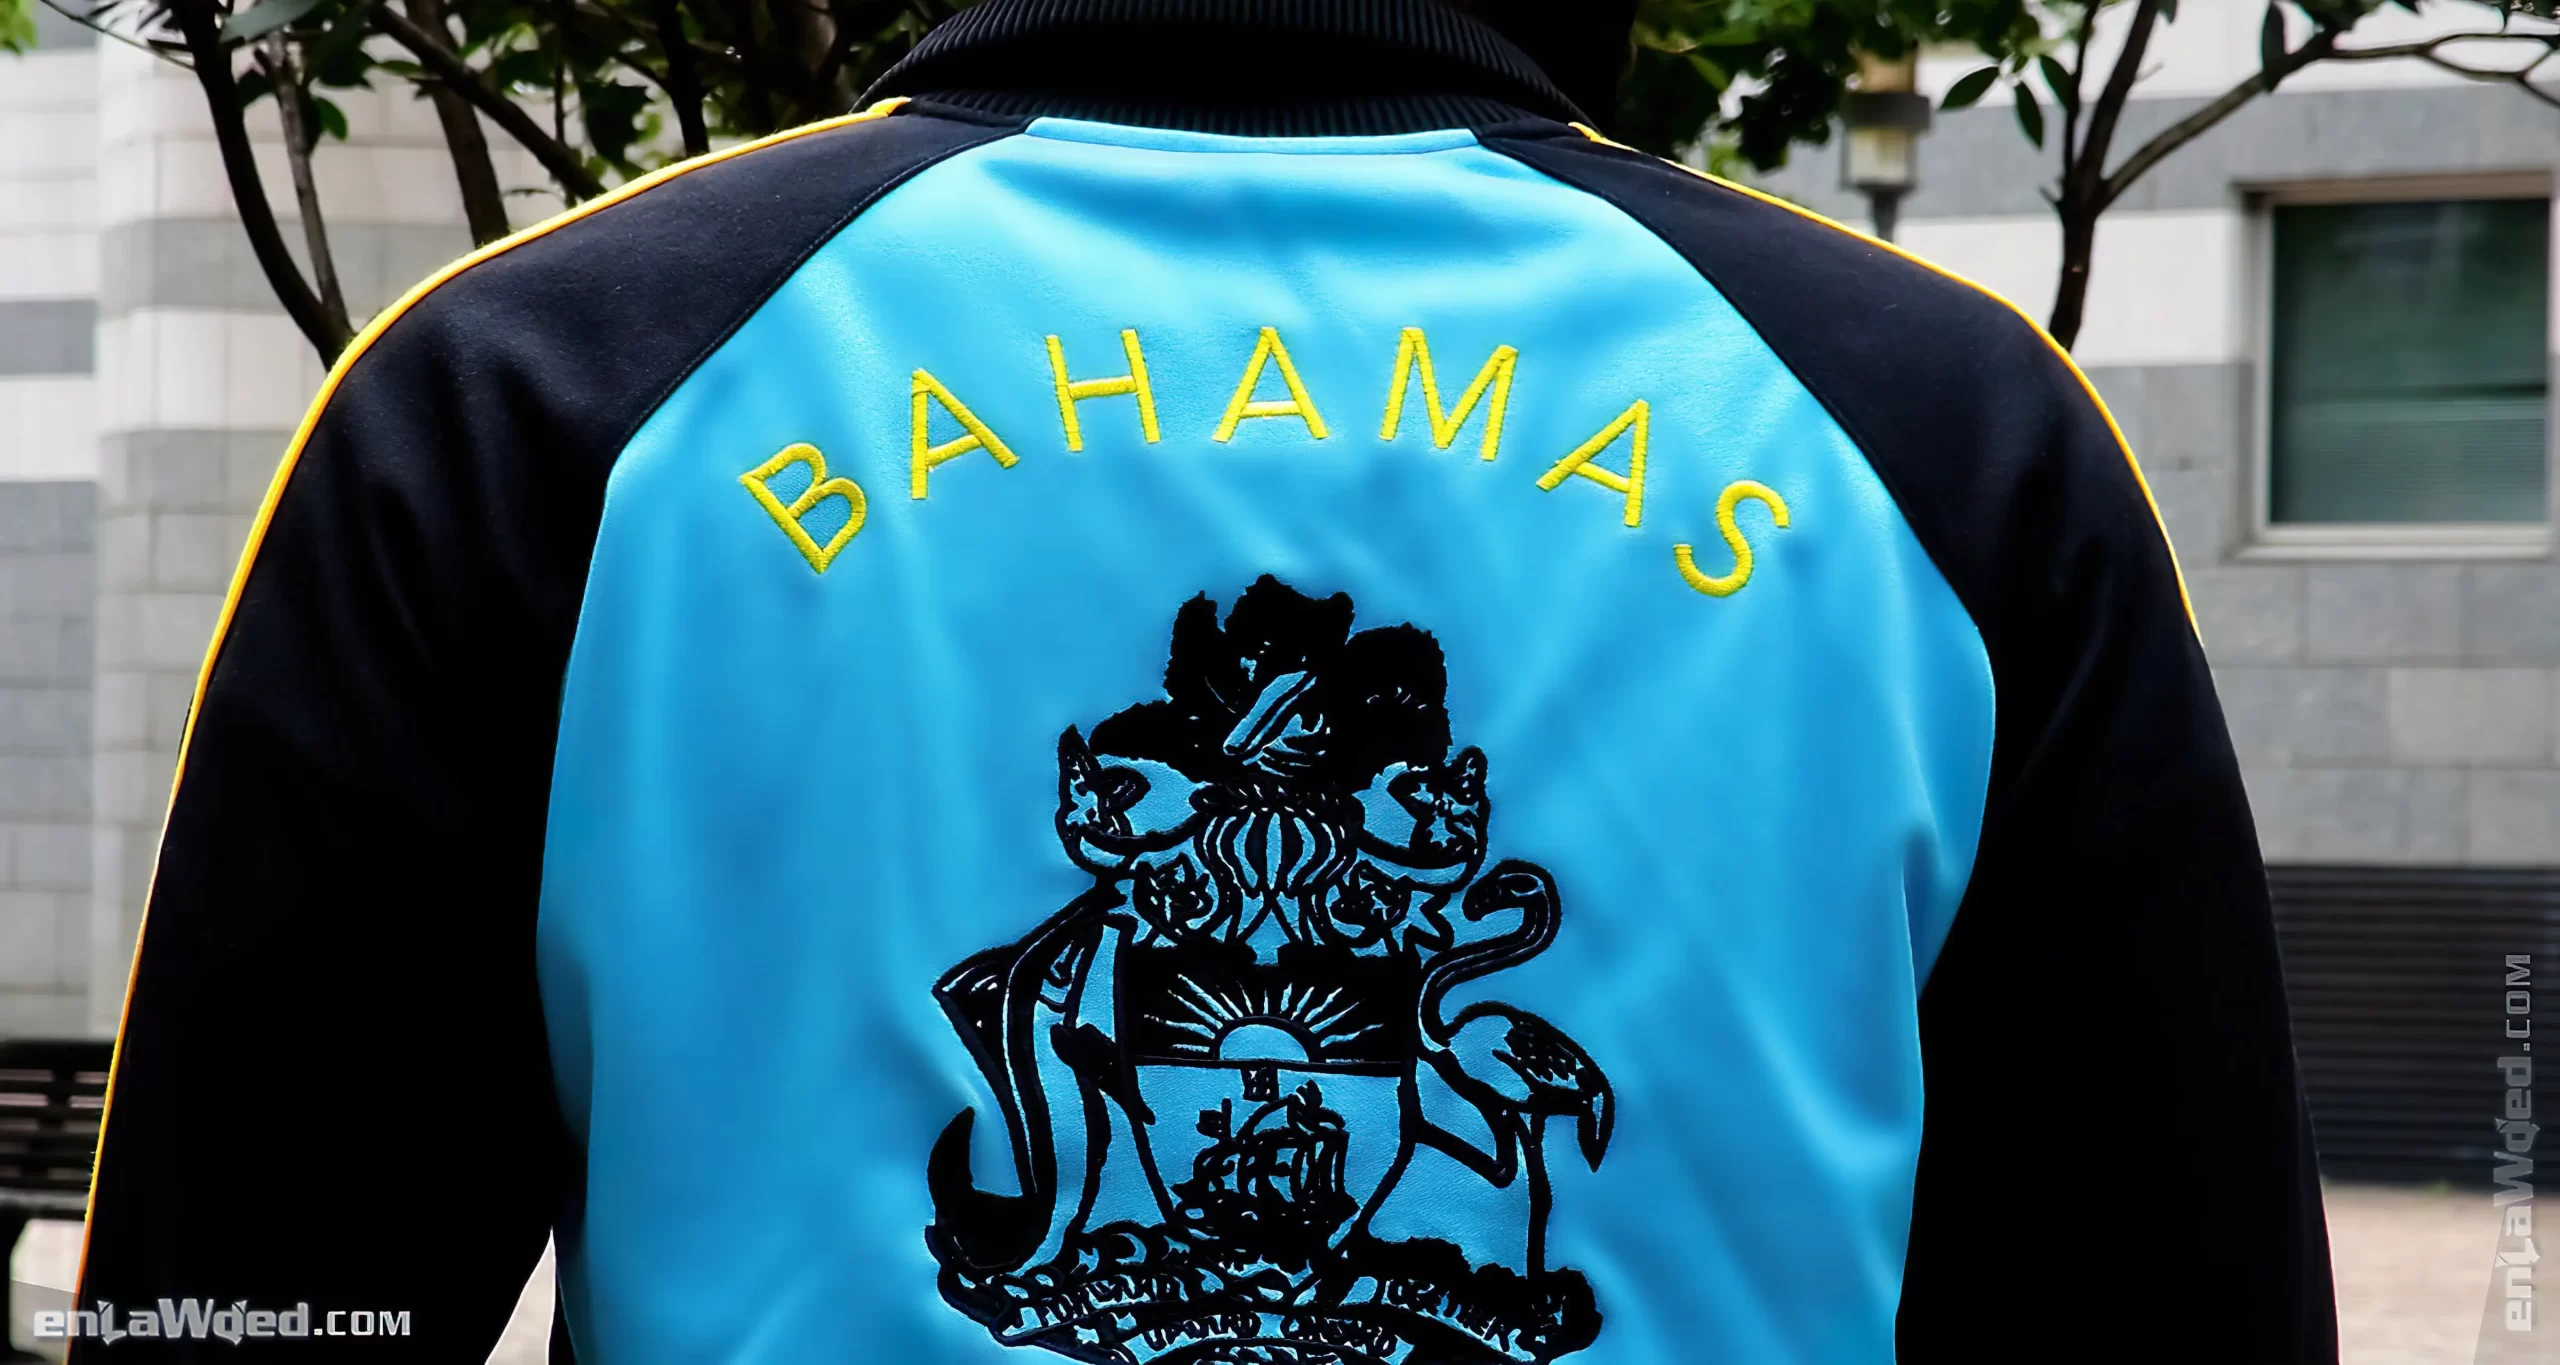 Men’s 2007 Bahamas Track Top by Adidas Originals: Charming (EnLawded.com file #lmchk90190ip2y122020kg9st)